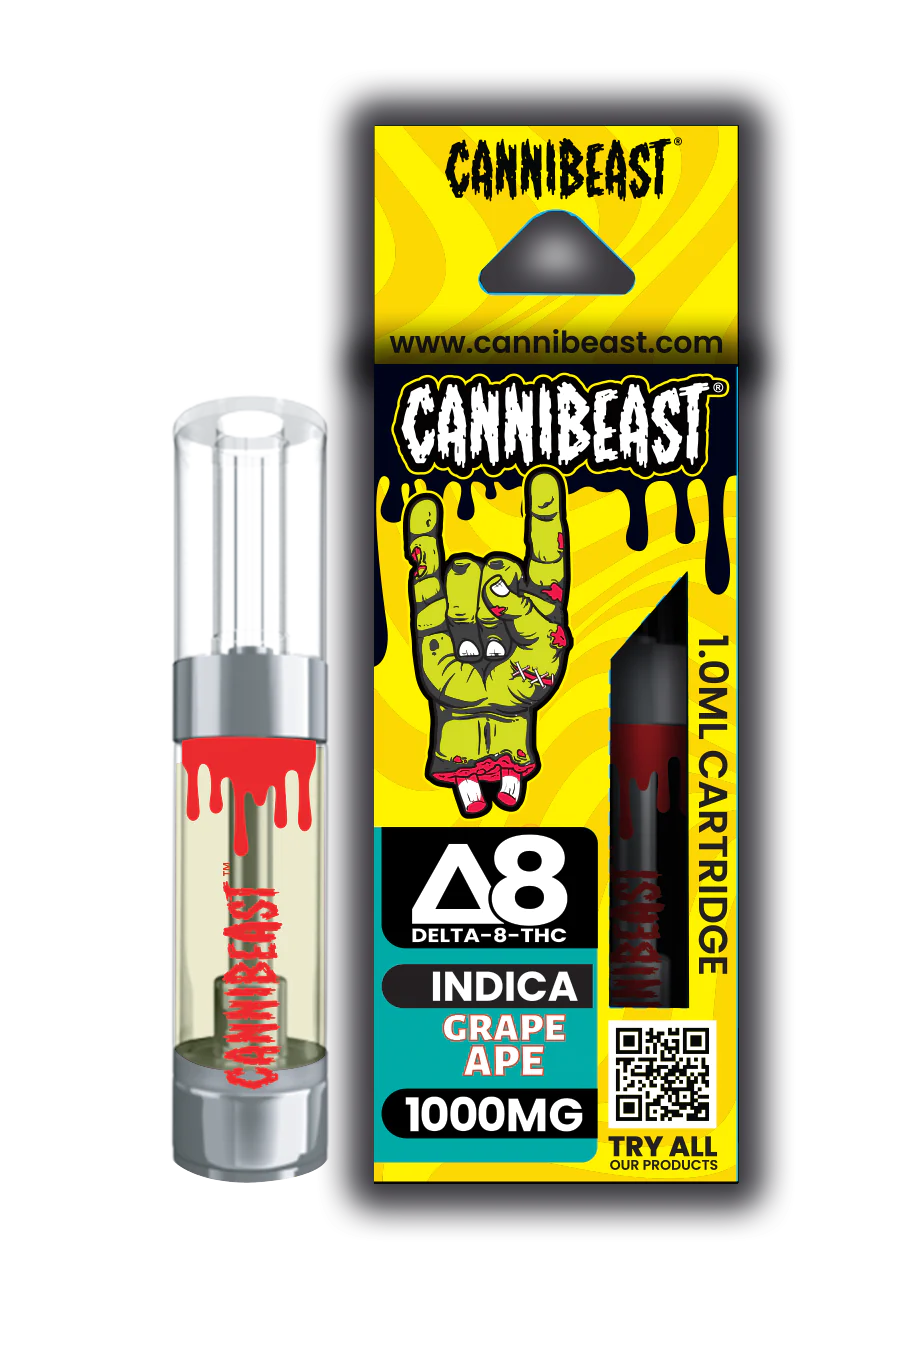 Cannibeast D8 Cartridge (single)